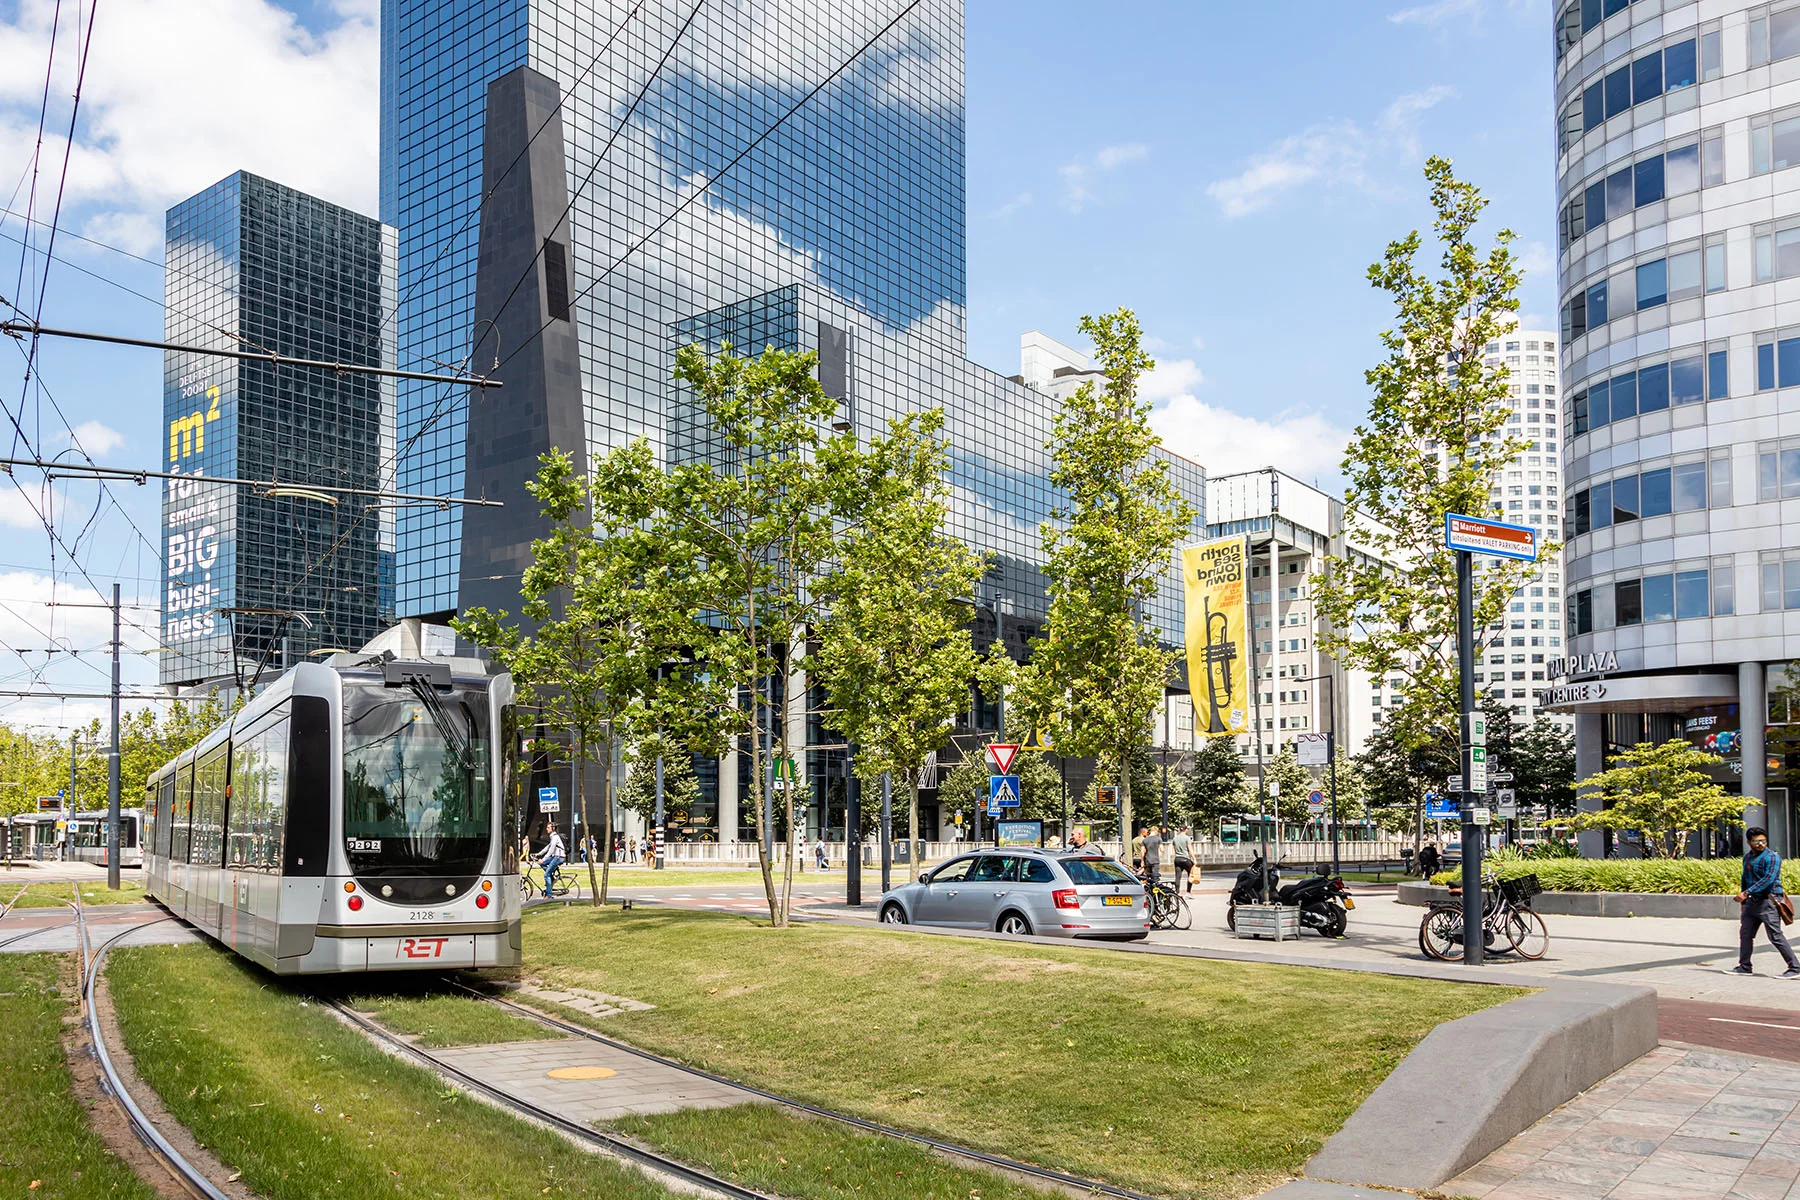 Tram driving through Rotterdam